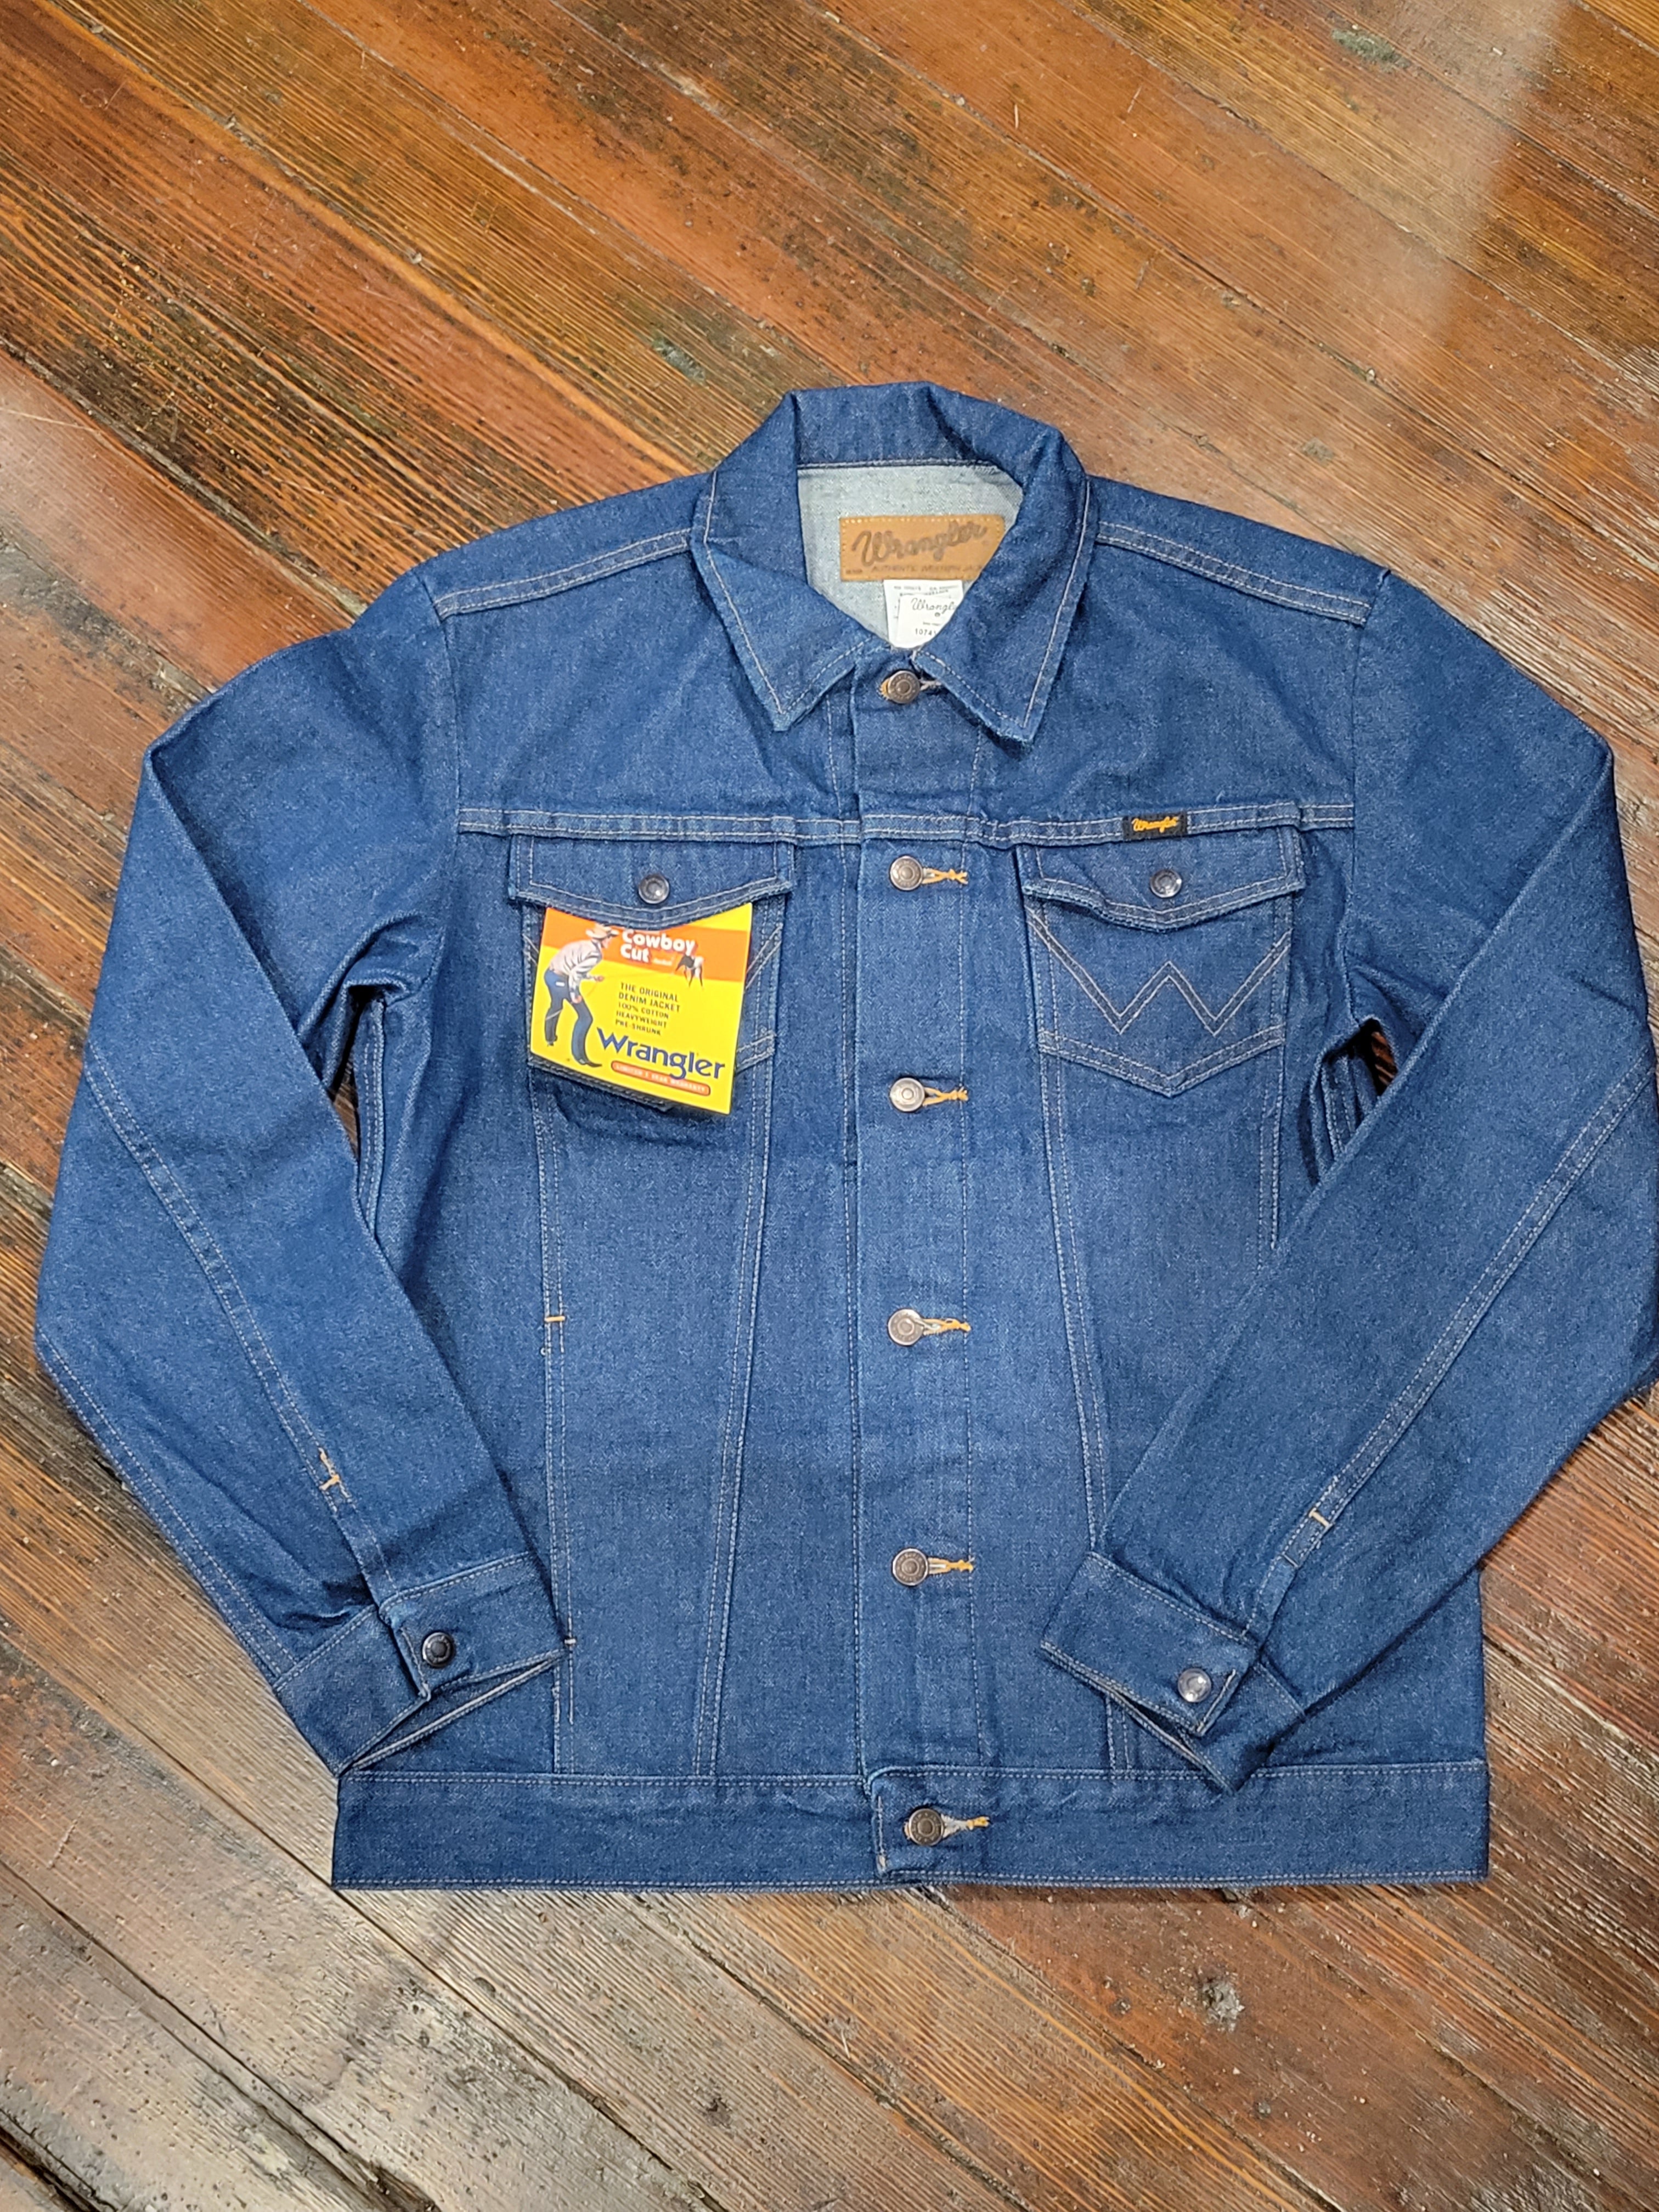 Wrangler Cowboy Cut Original Fit Jean- Shadow Black – Dales Clothing Inc